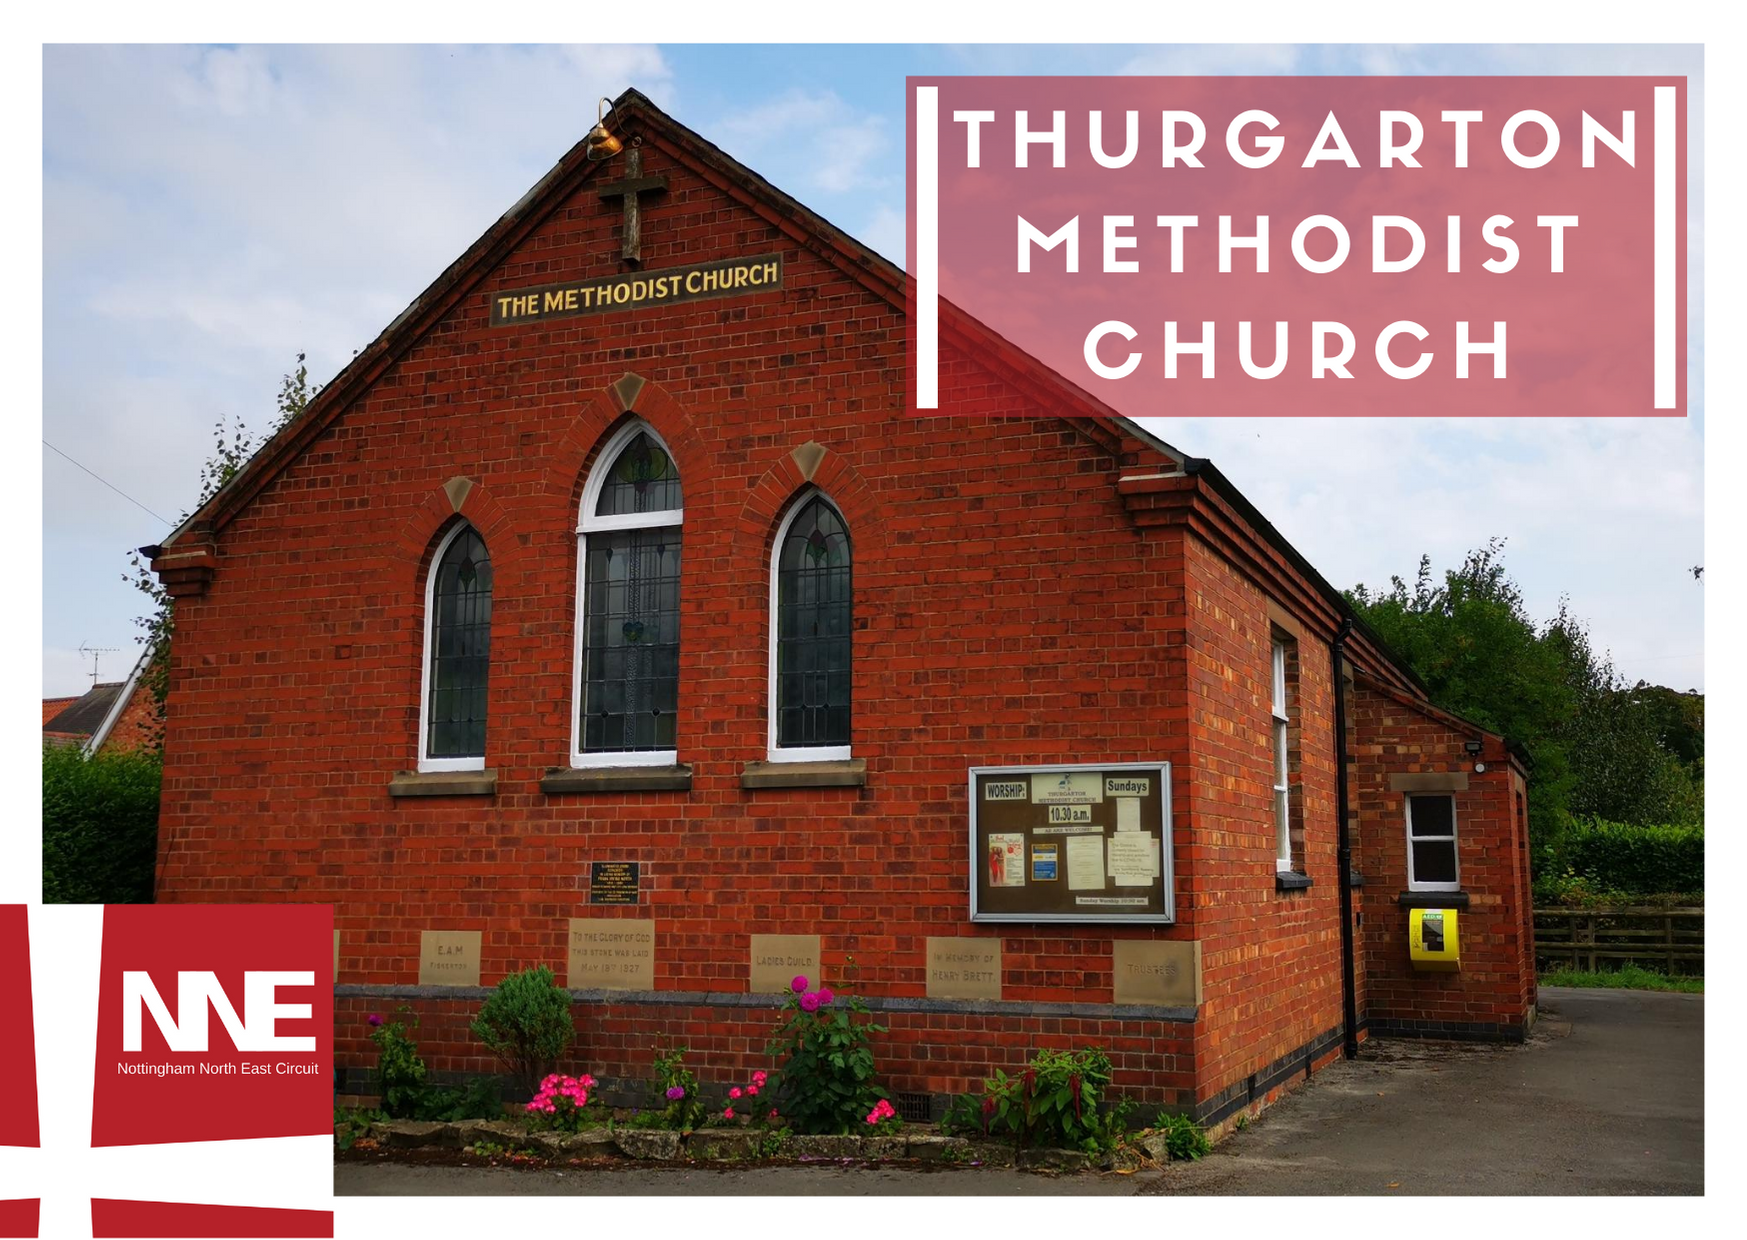 Thurgarton Methodist Church